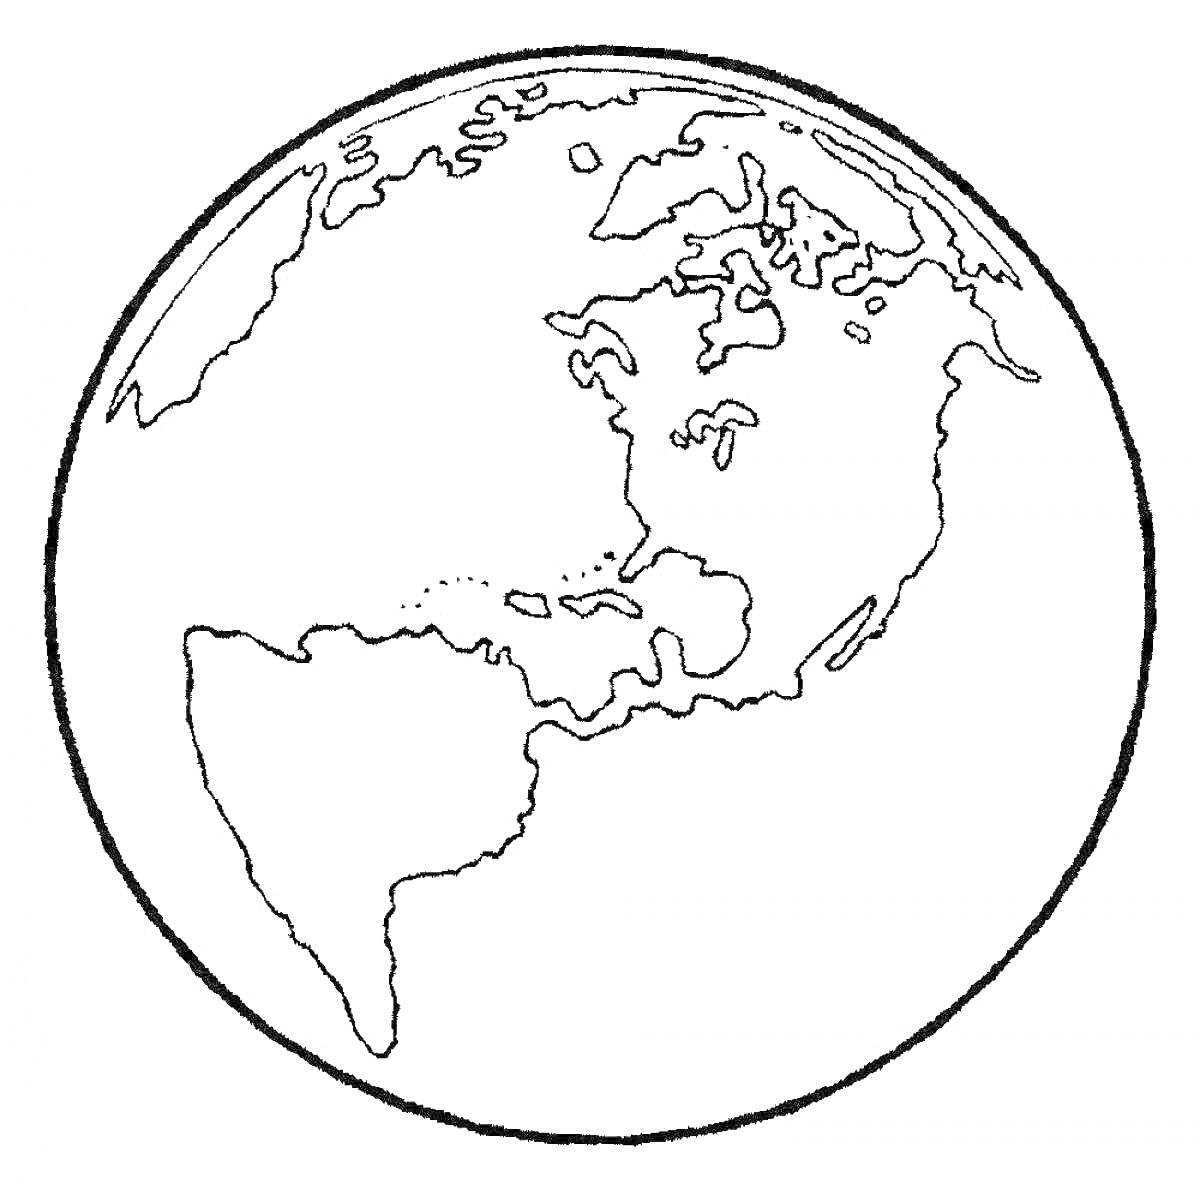 Раскраска Контурное изображение Земли с континентами Северная Америка, Южная Америка, Европа, и Африка